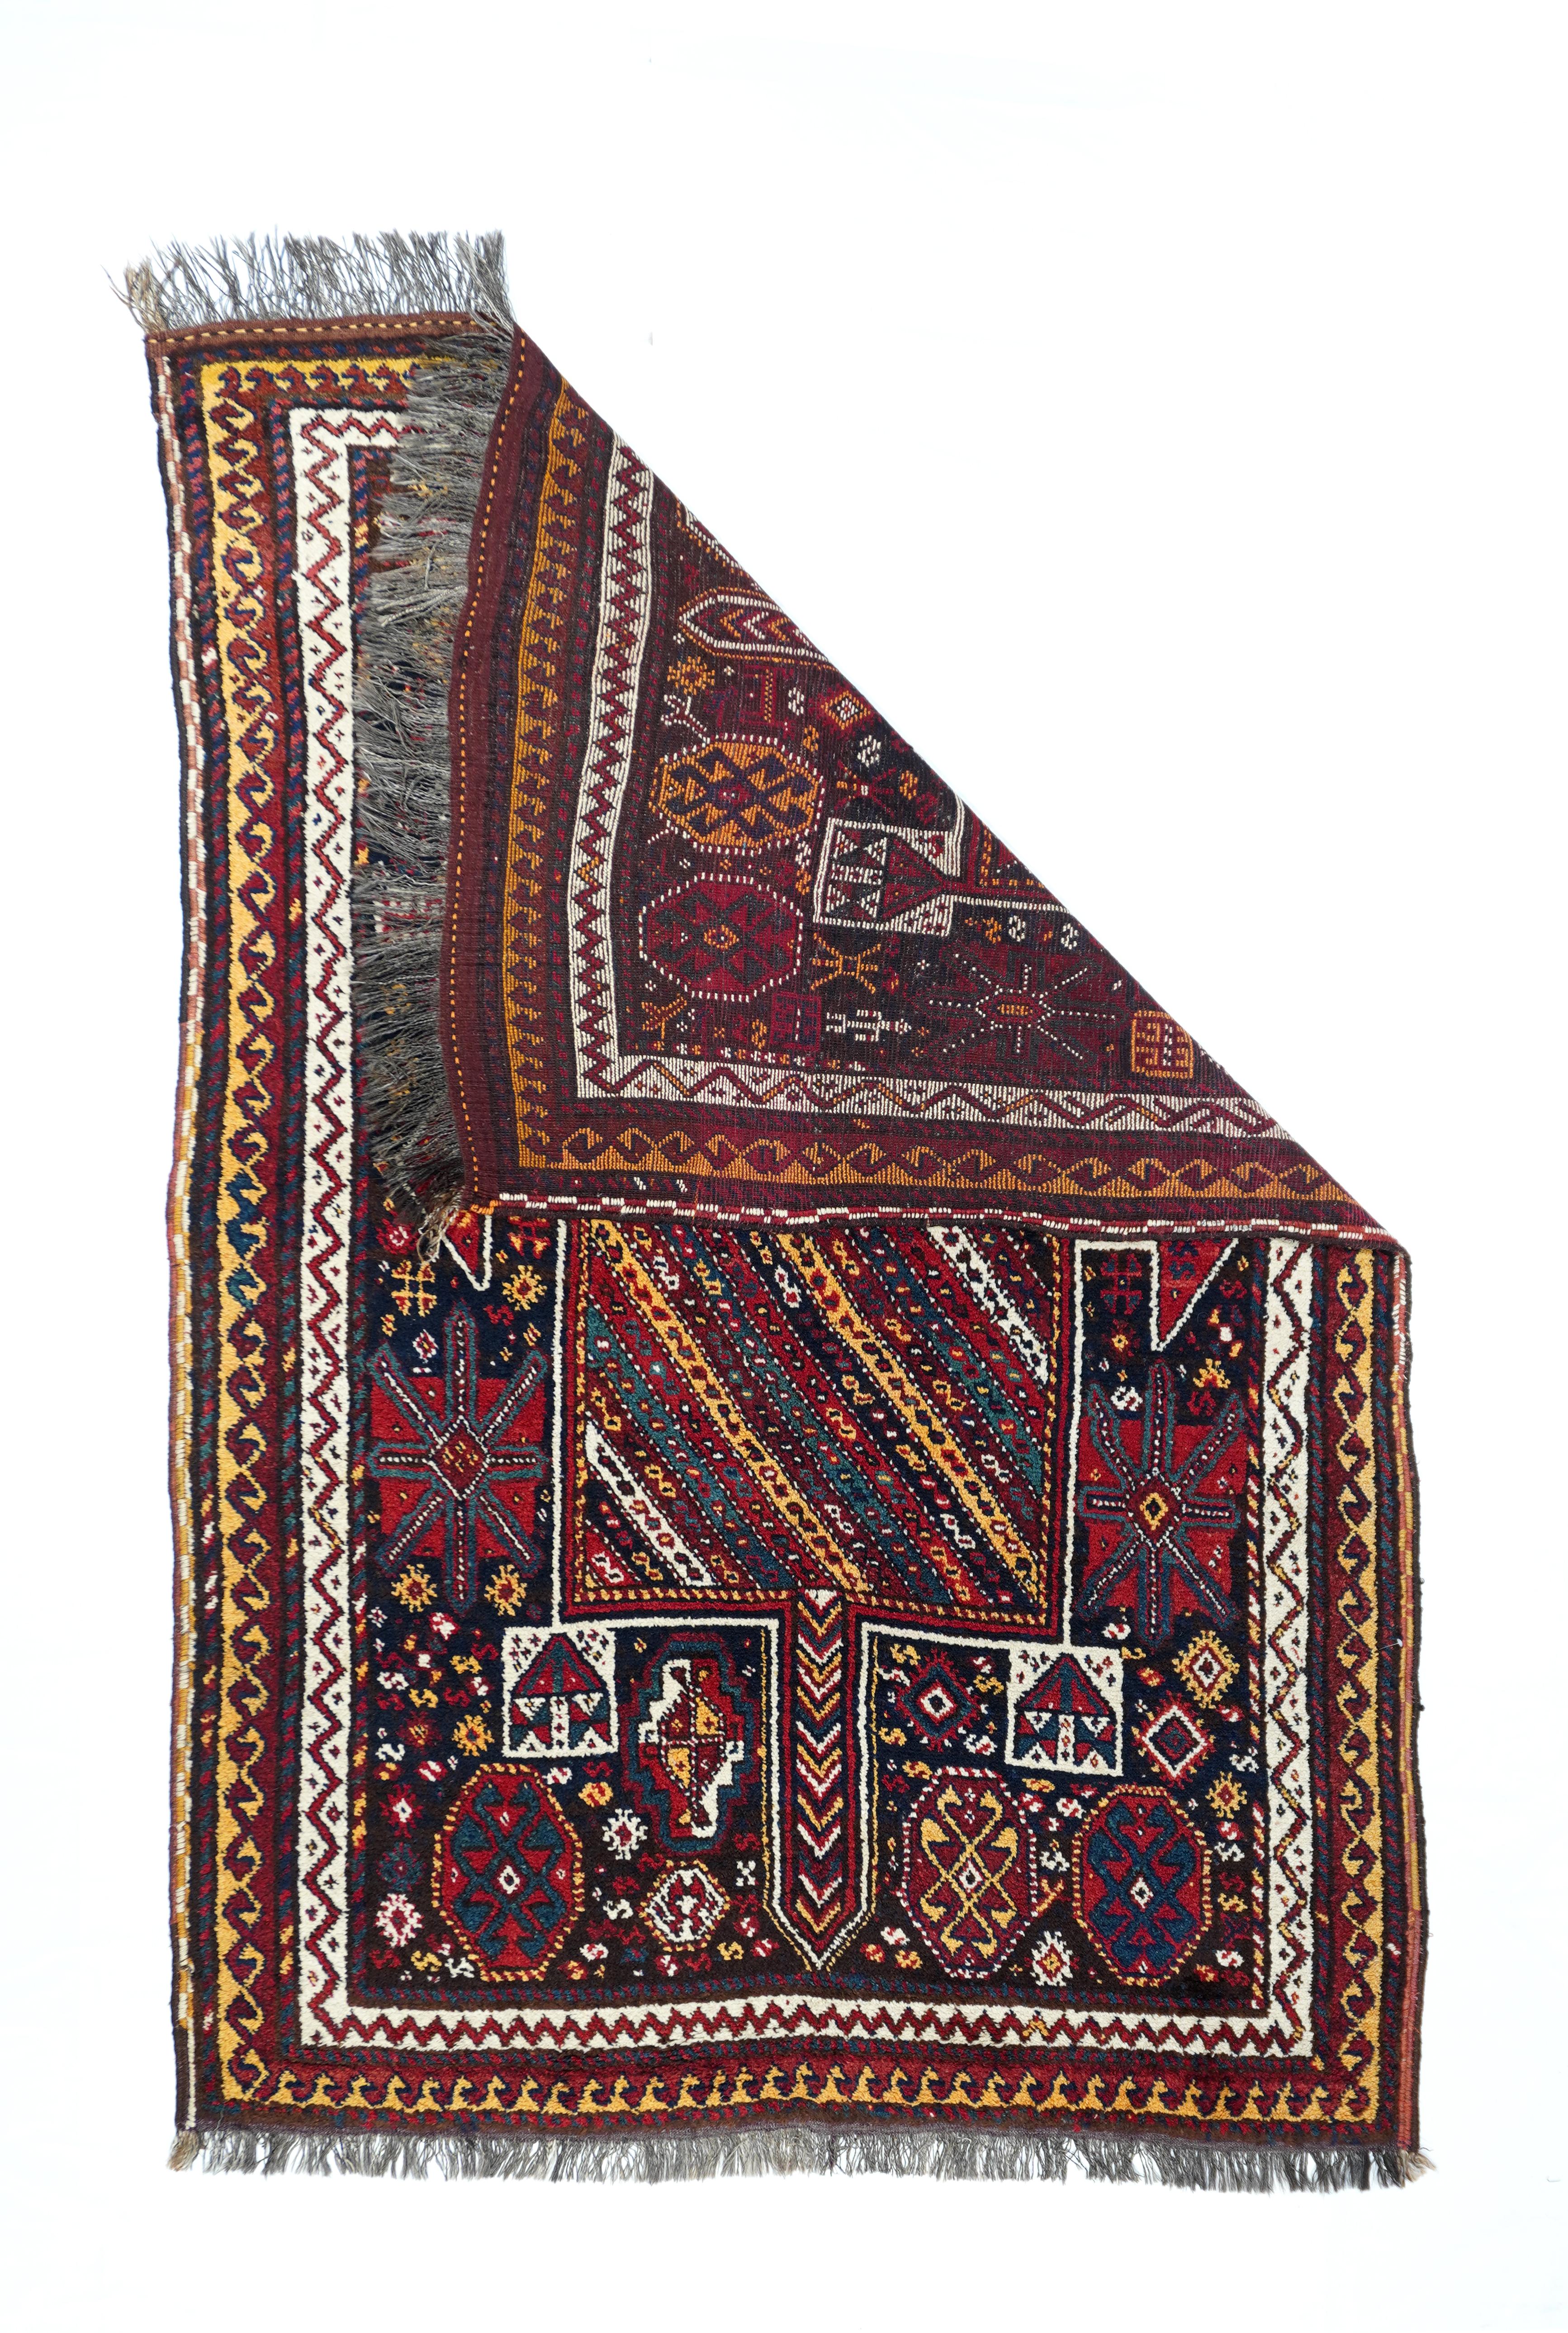 Antique Kashkai Shiraz Rug 4'8'' x 7'. This rare NE Persian tribal scatter shows a rectangular, upright 